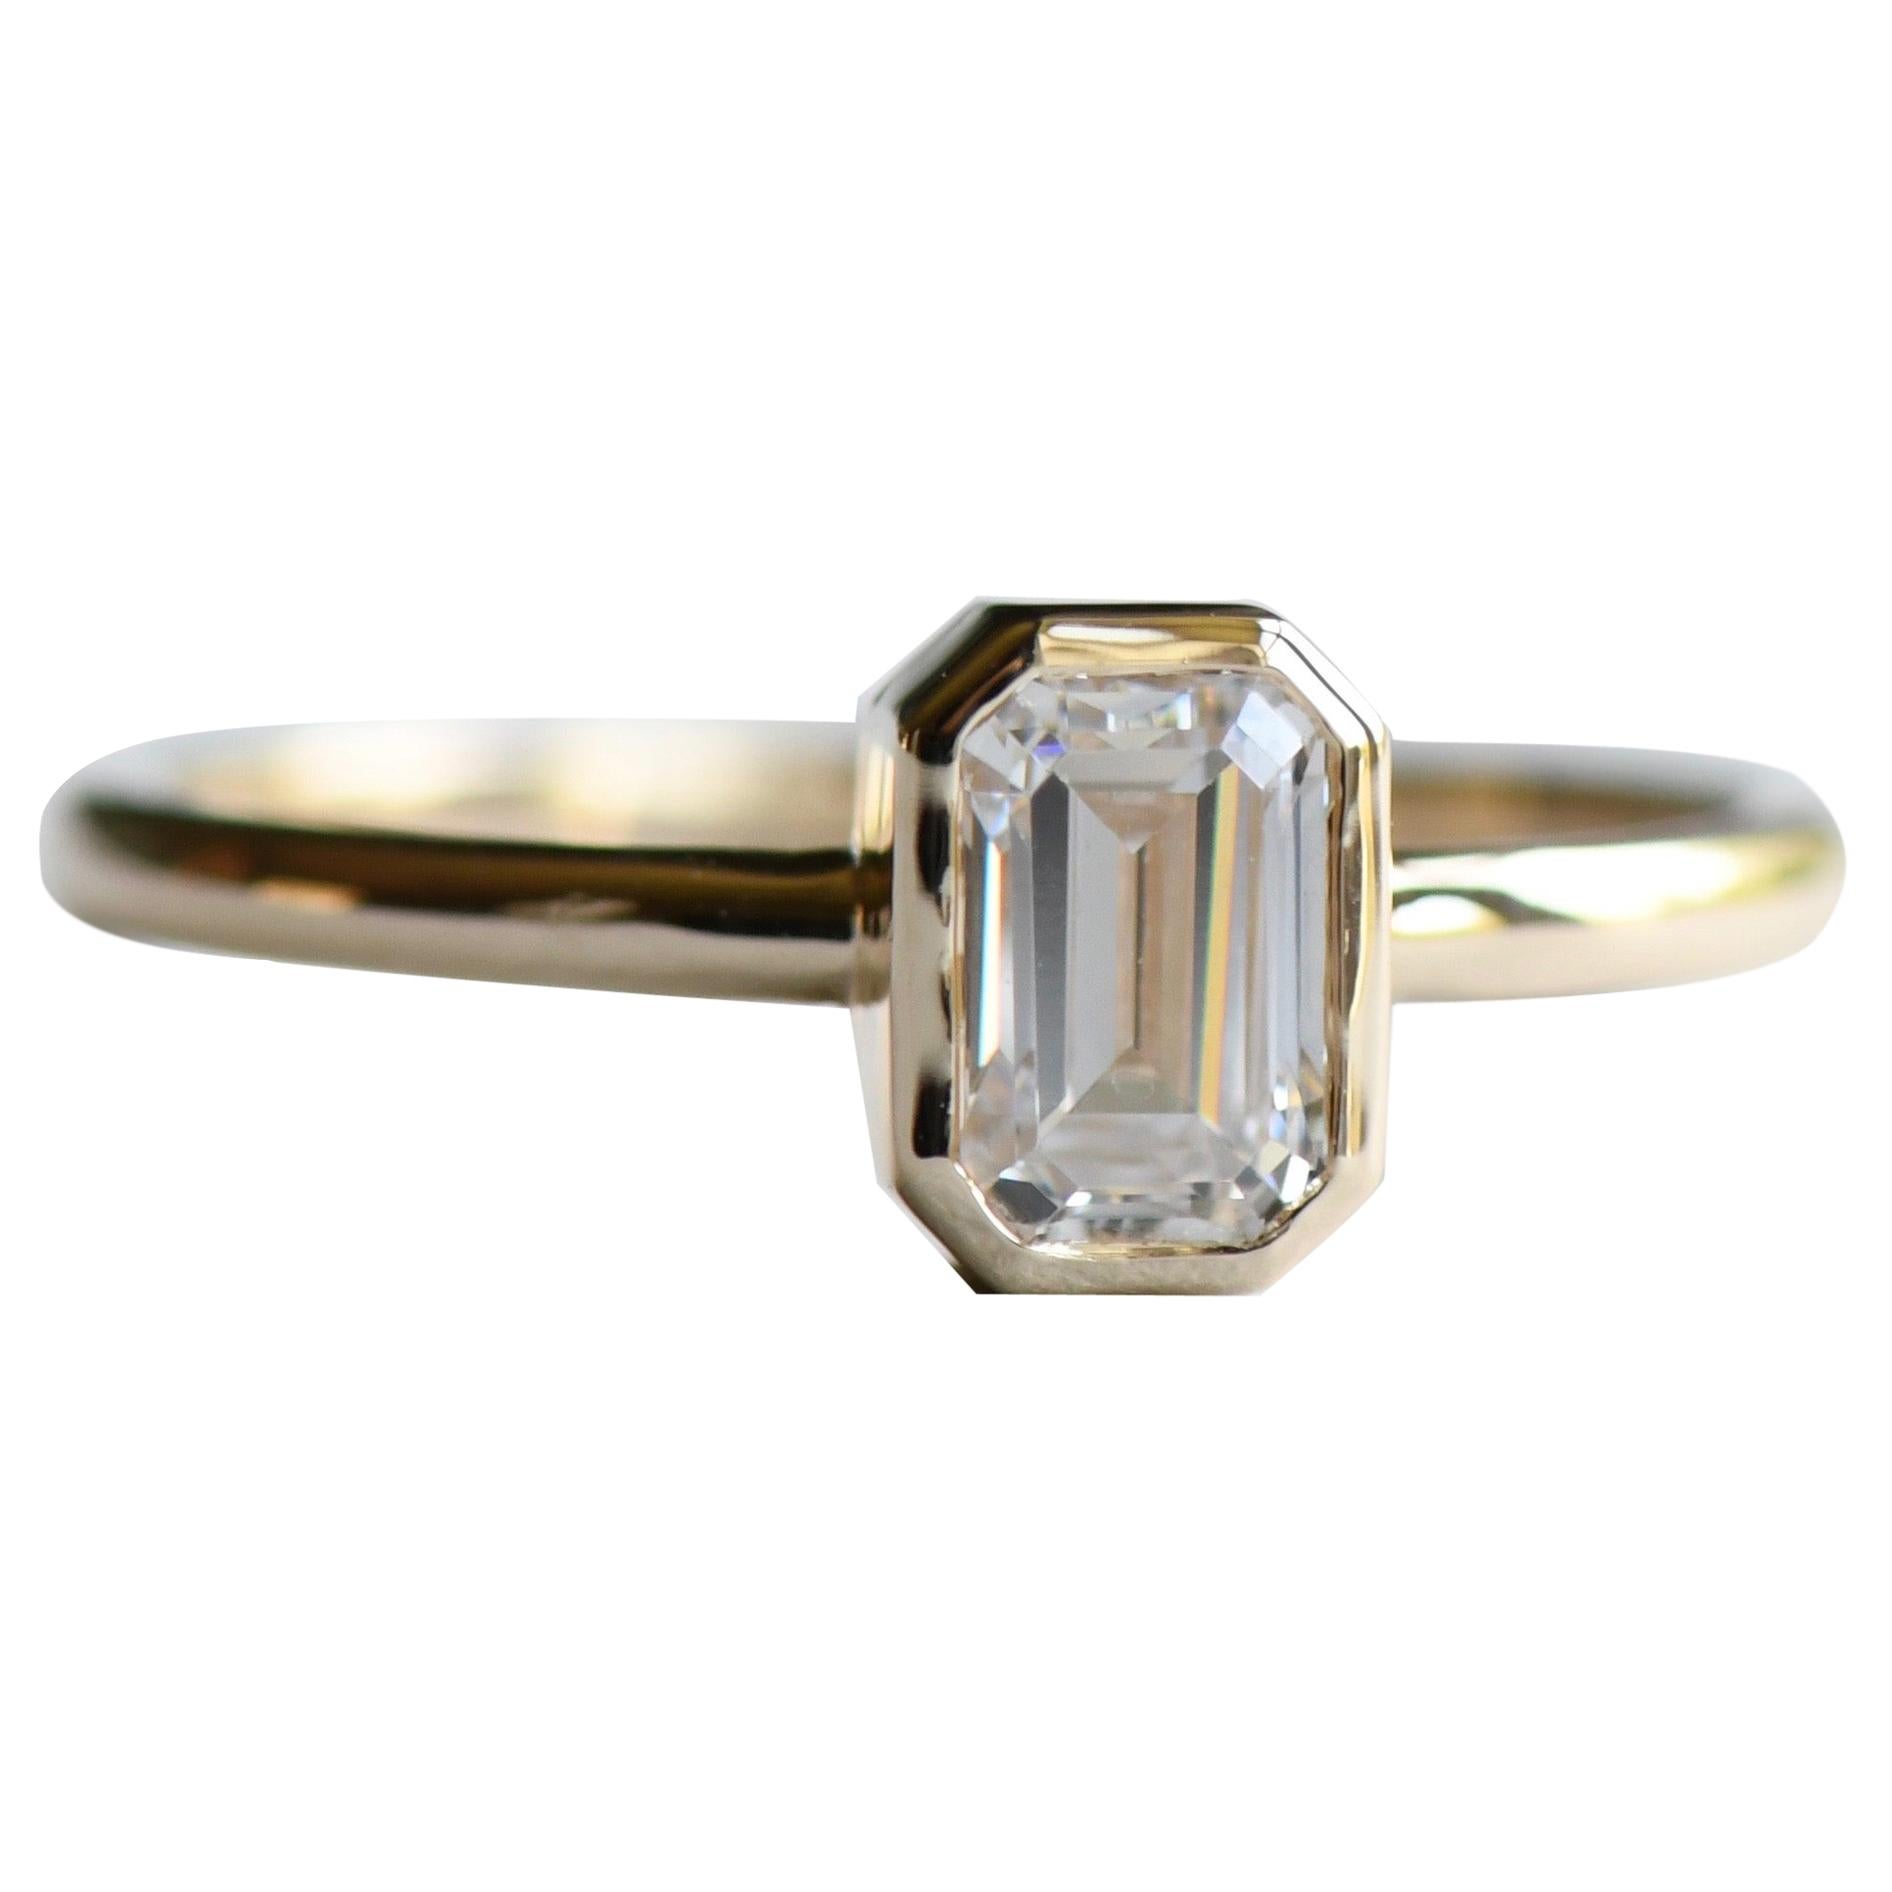 0.5 carat emerald cut diamond ring